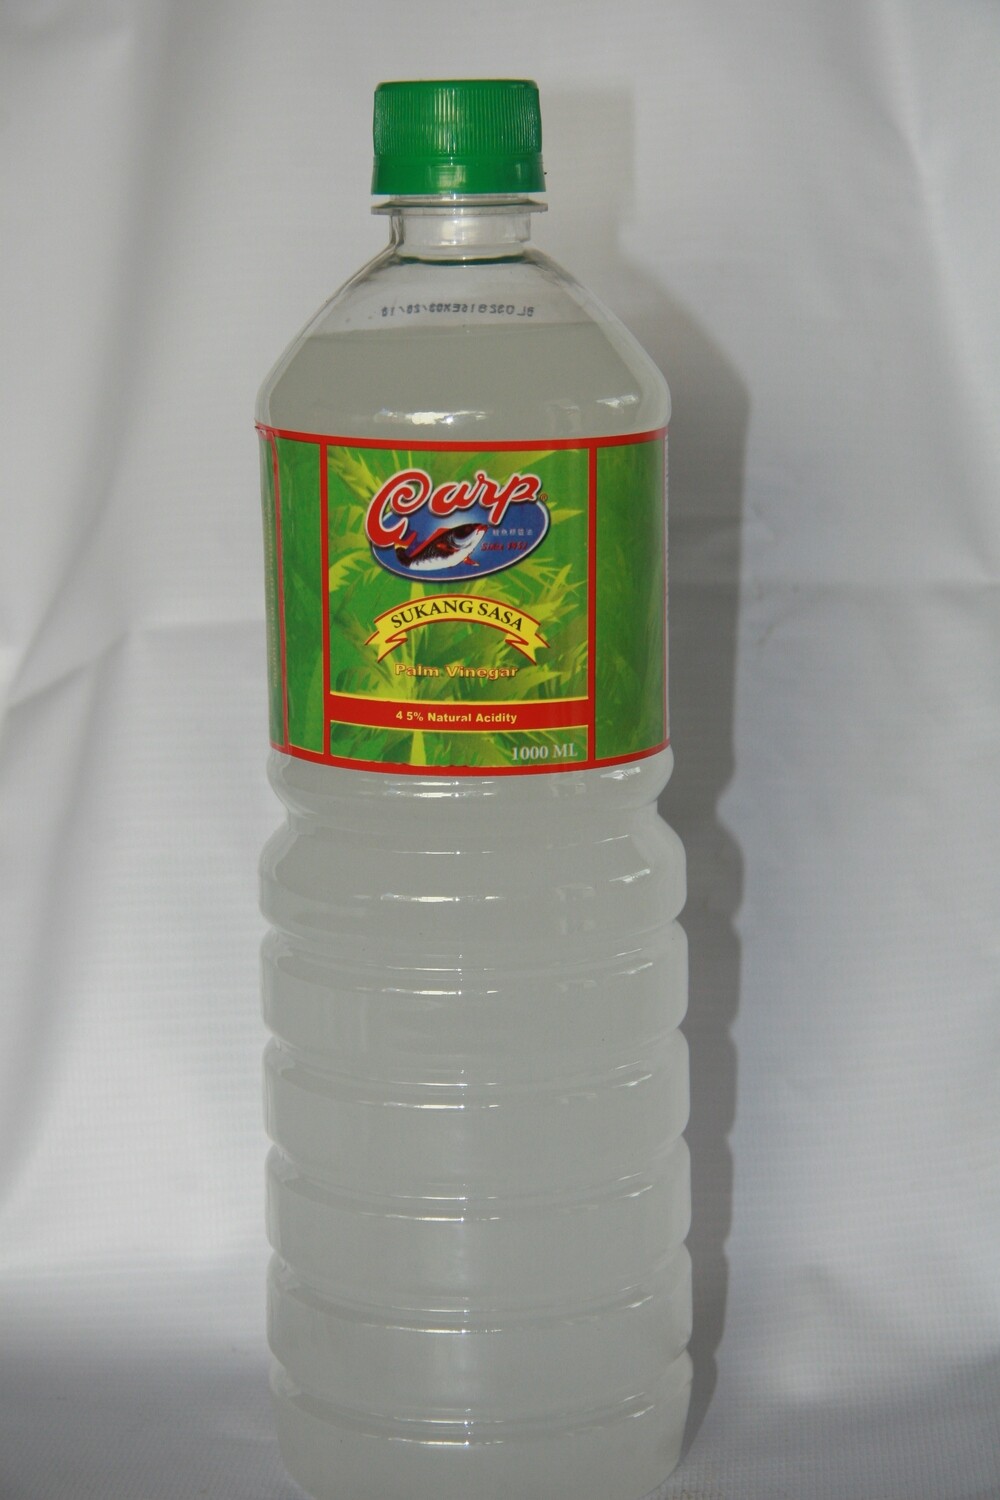 CARP Sukang Sasa 1000ml (Palm Vinegar)